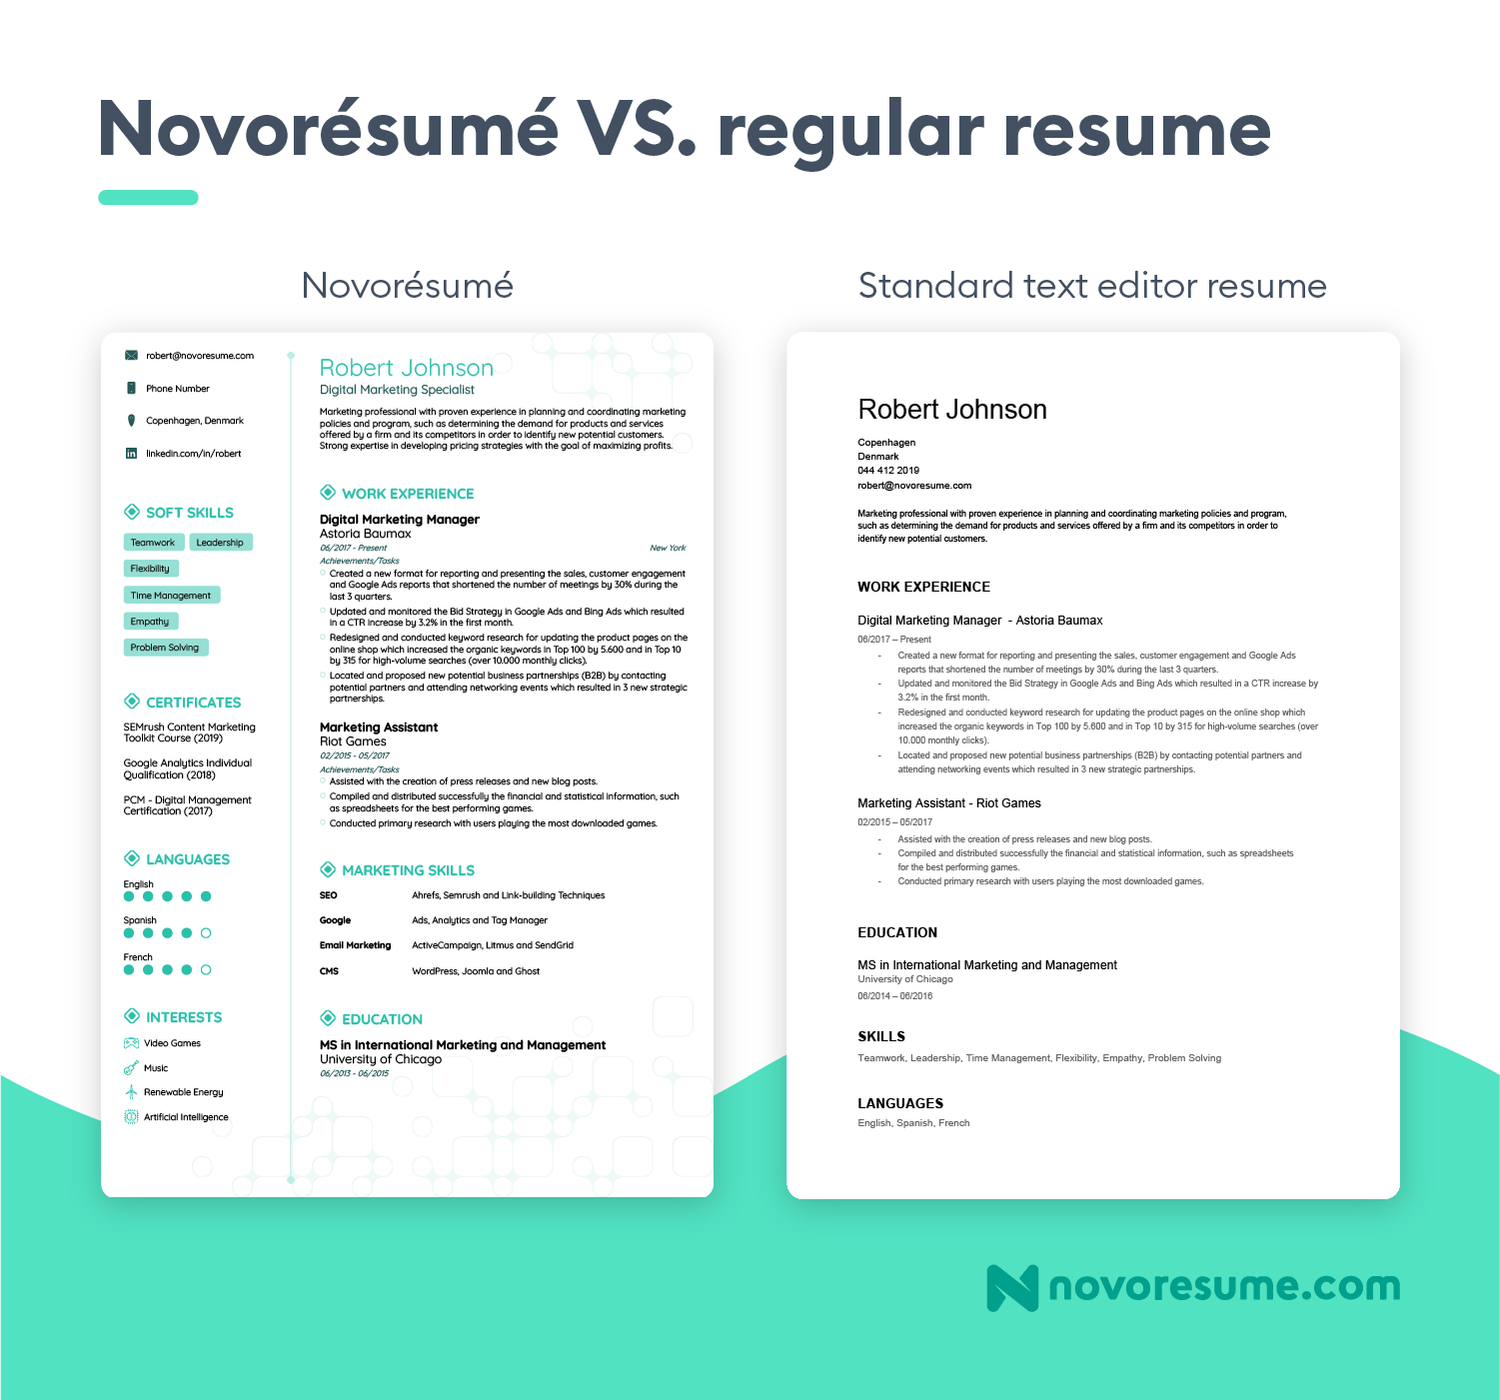 novoresume vs regular resume